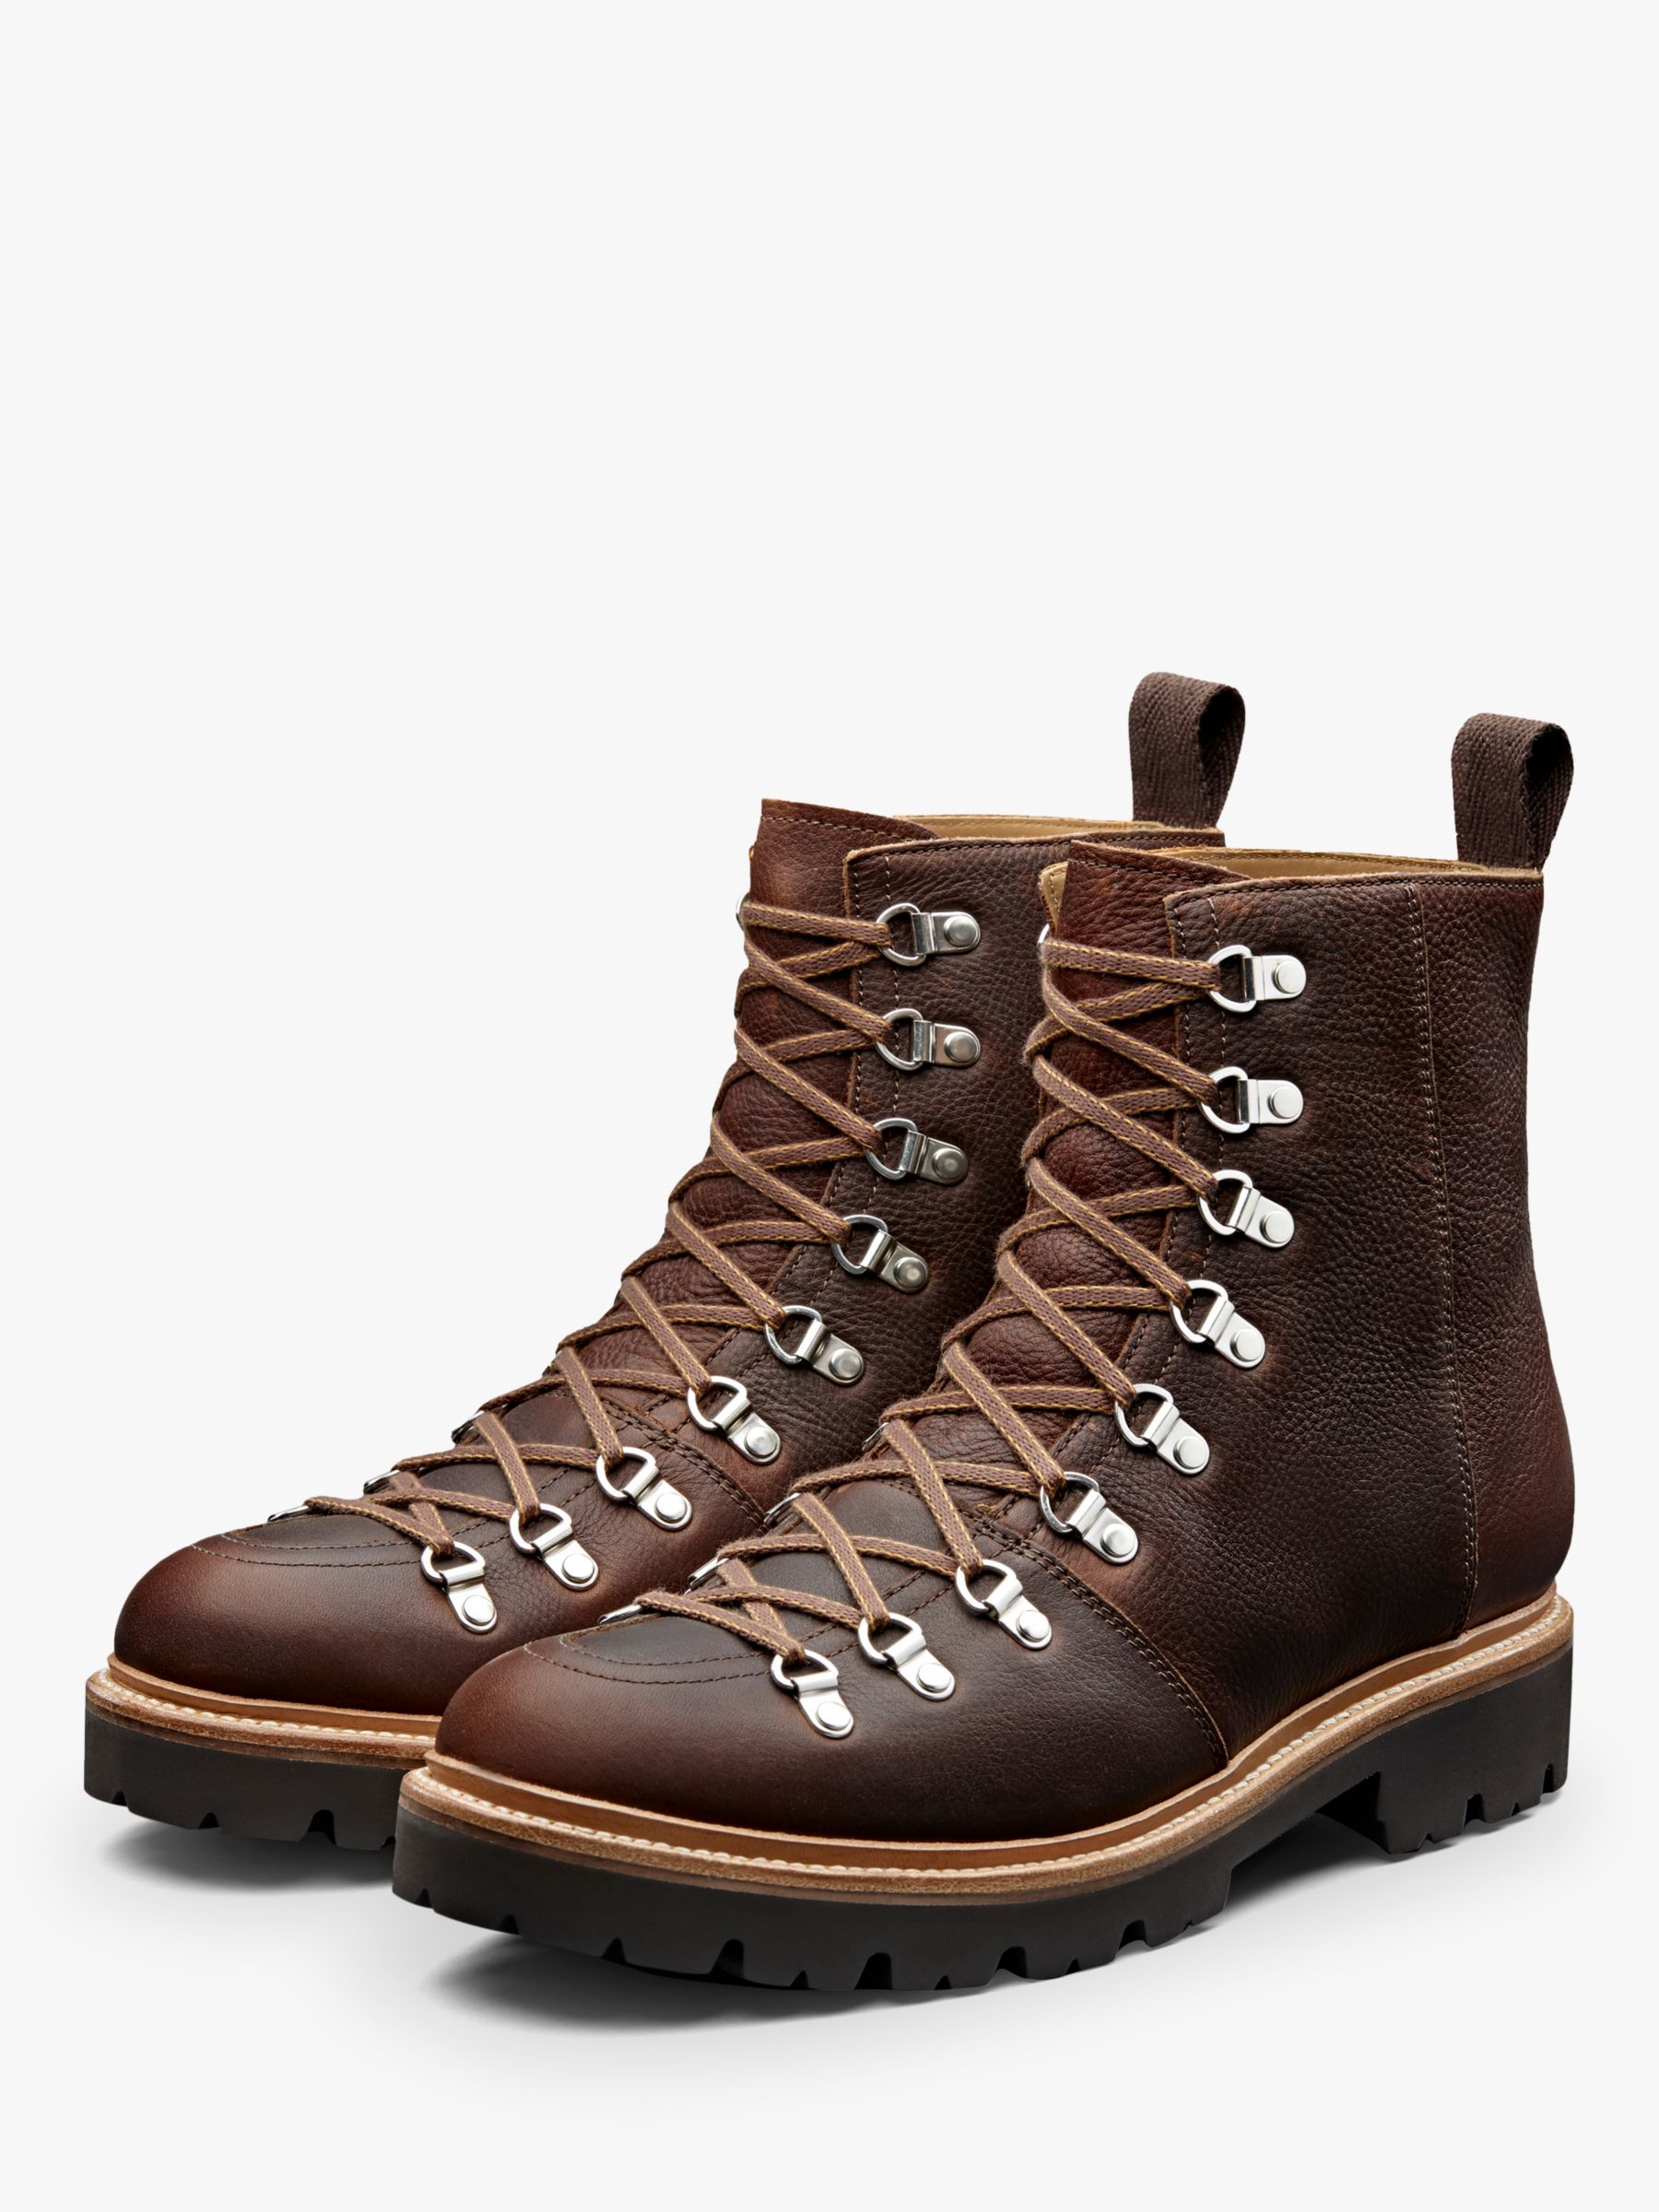 grenson brady boots review